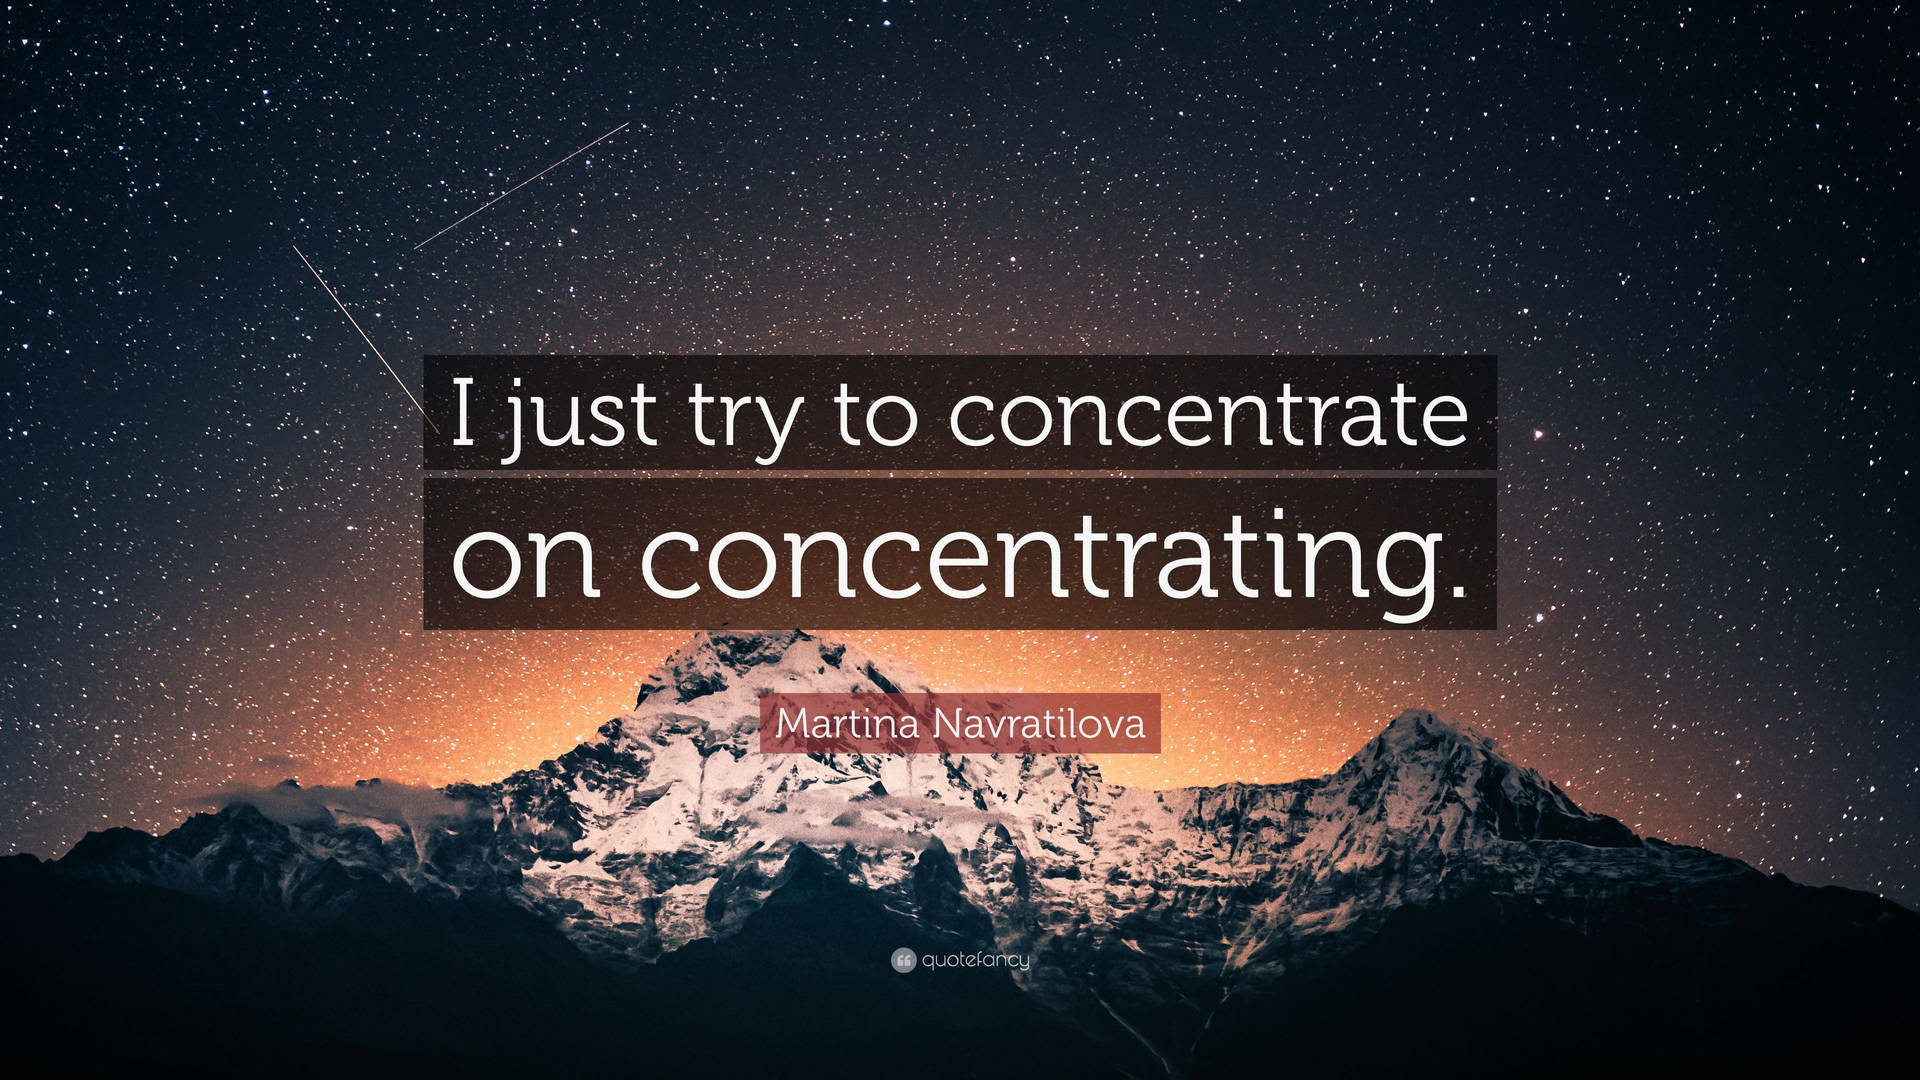 Martina Navratilova Quote About Concentrating Wallpaper